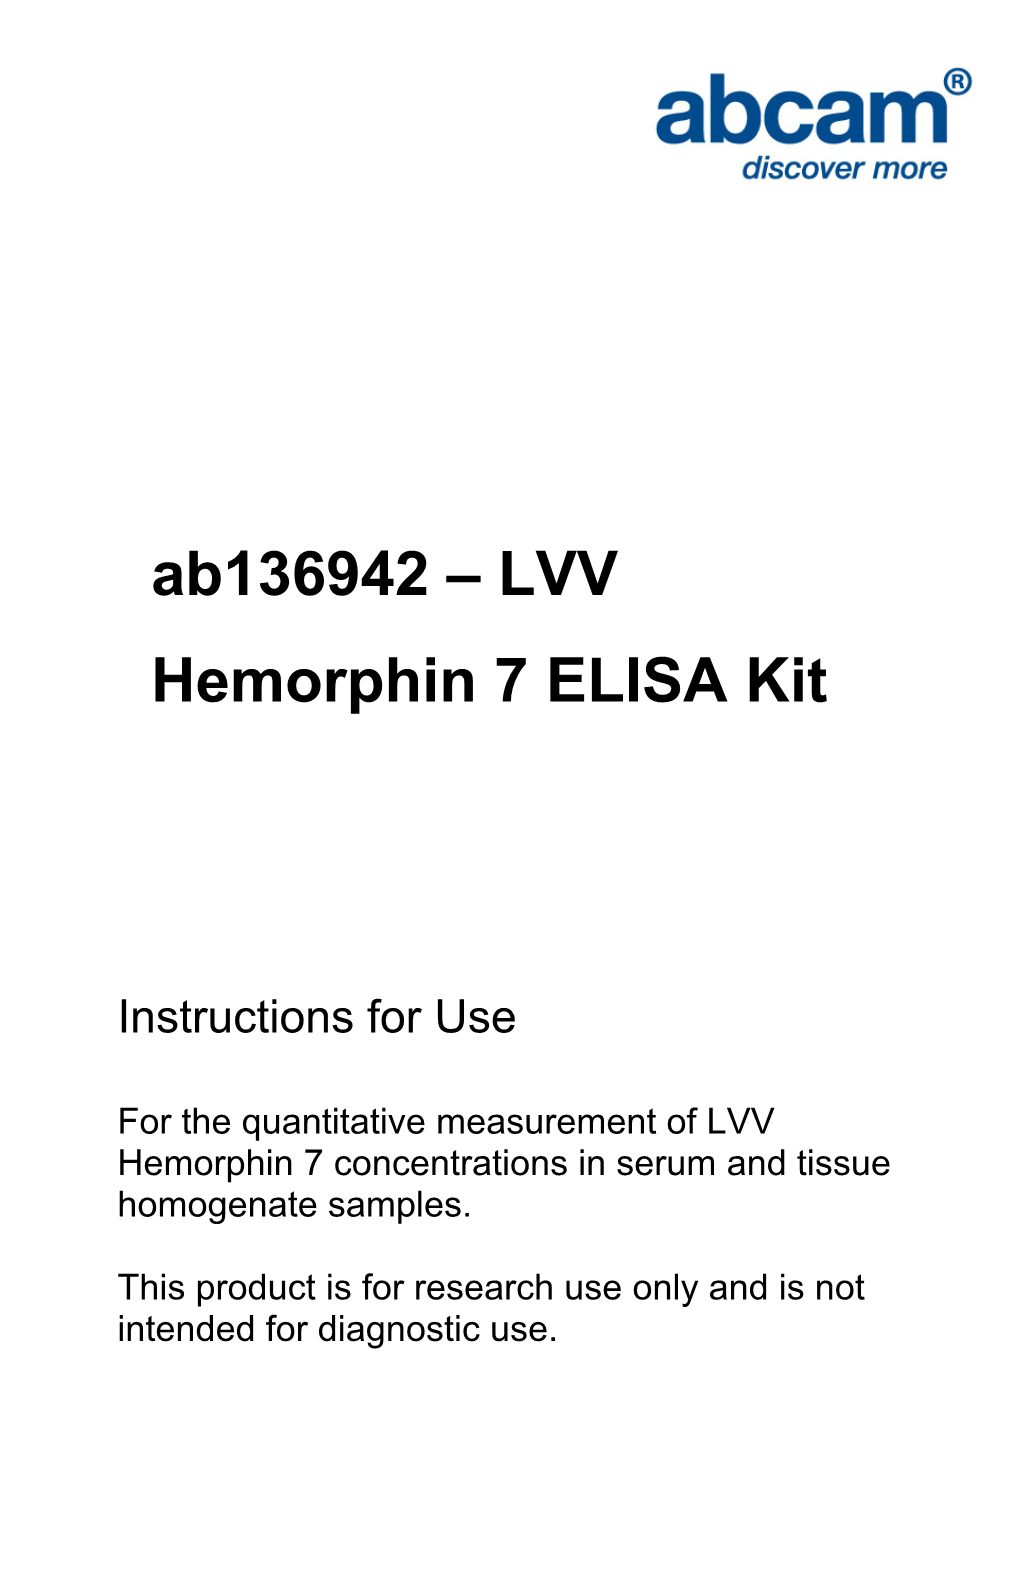 Ab136942 – LVV Hemorphin 7 ELISA Kit